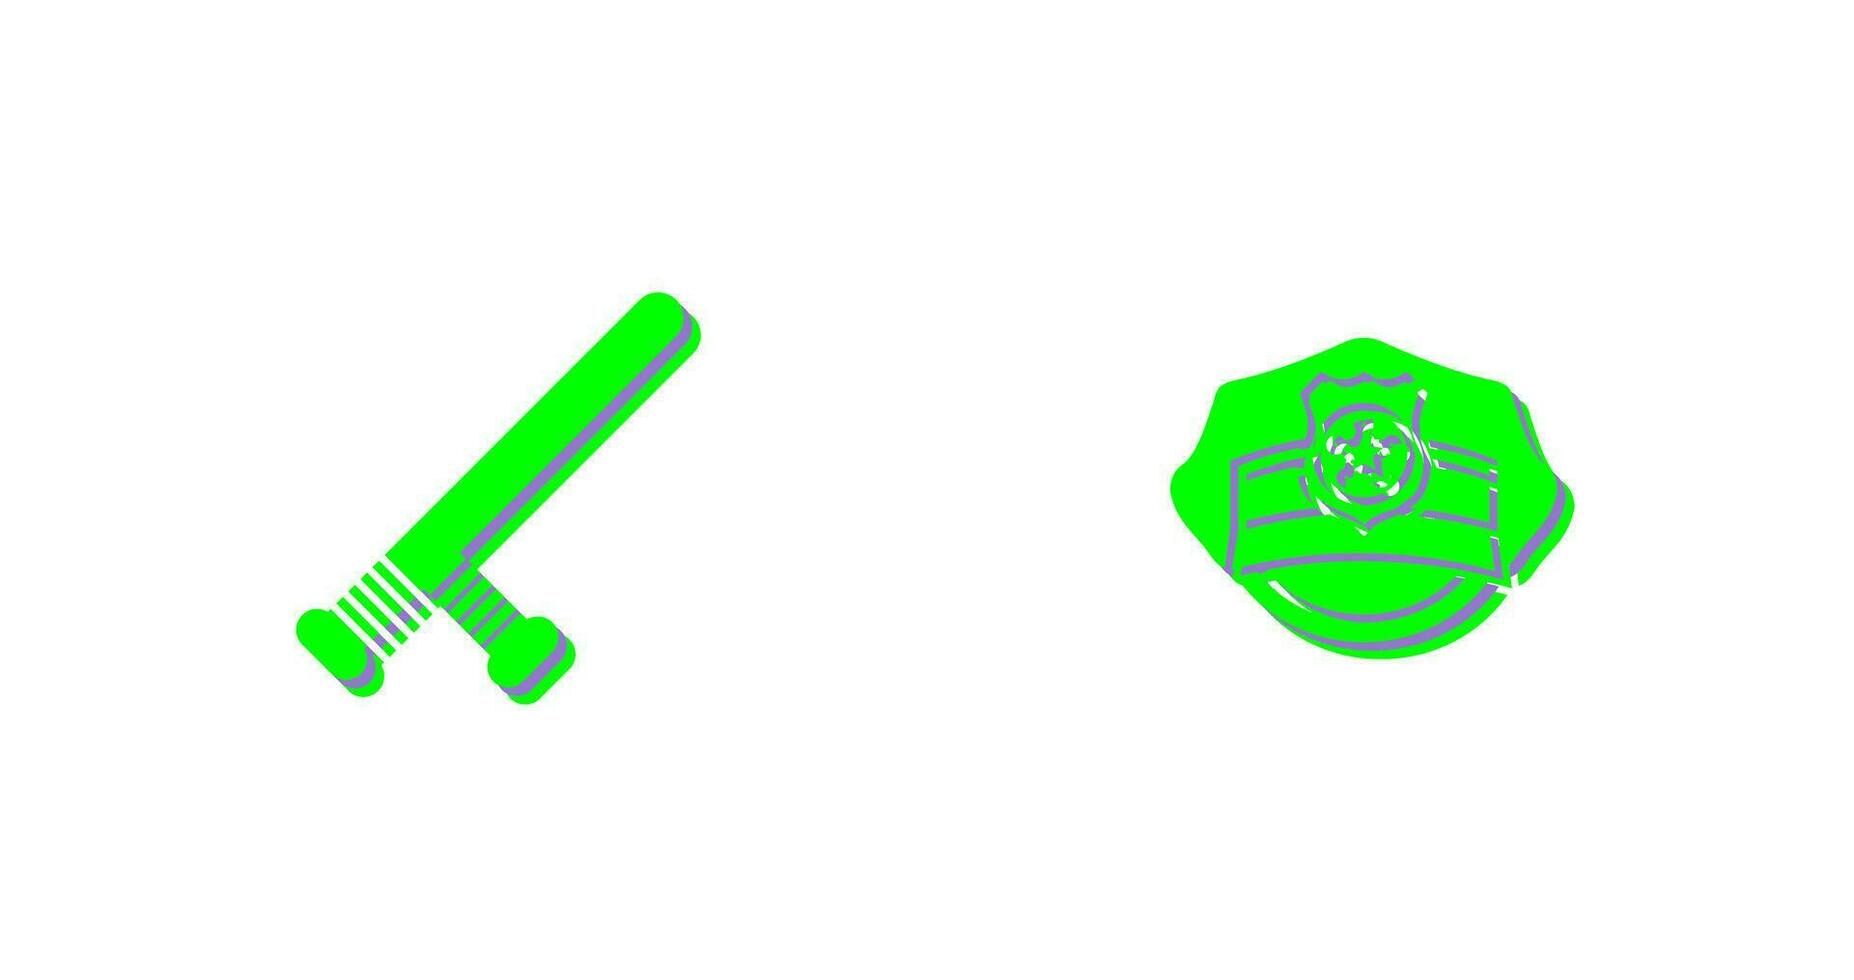 Taktstock und Polizei Symbol vektor